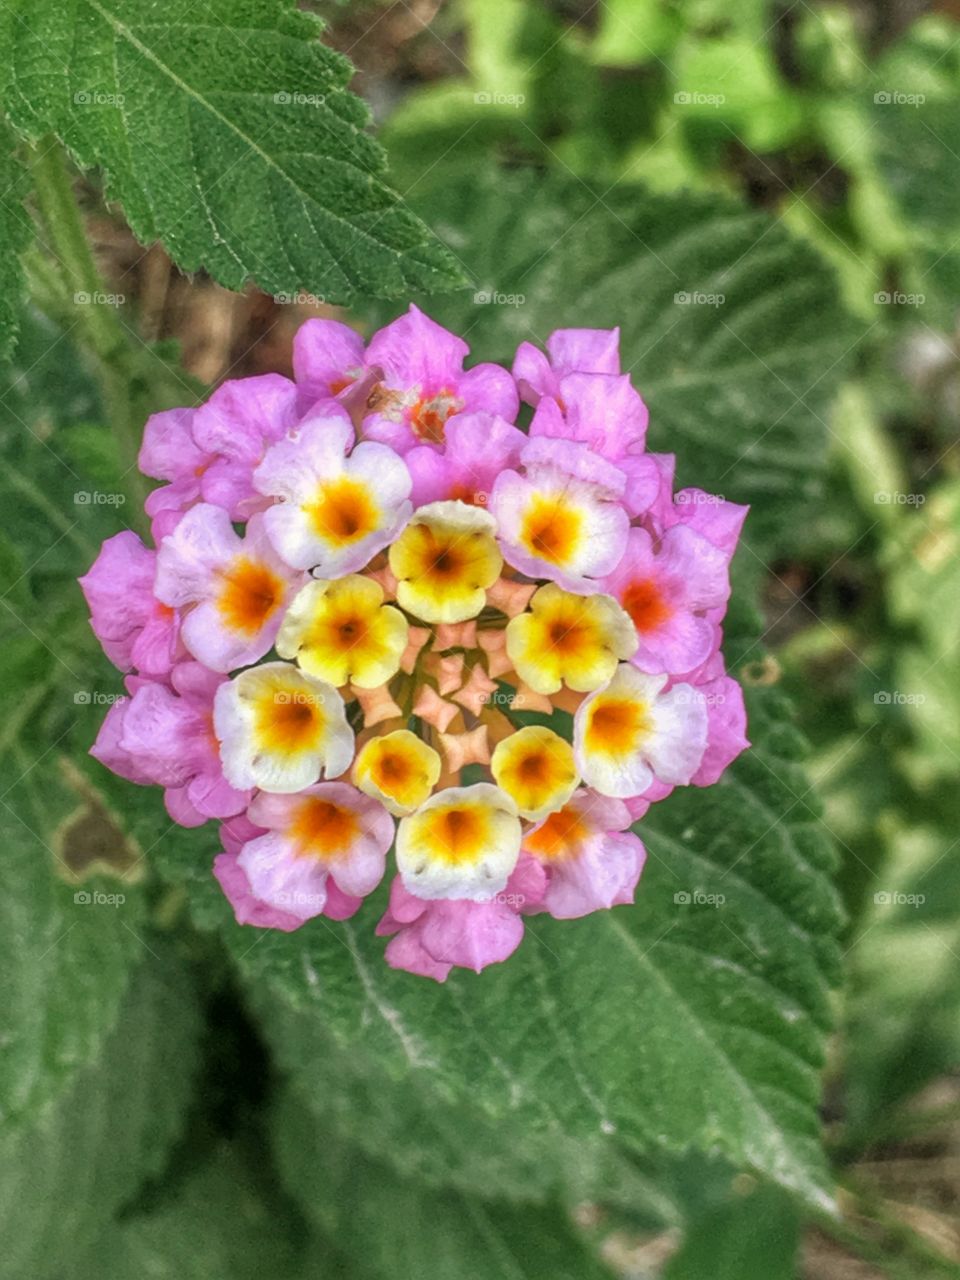 Flower I found in a field in Houston Texas 